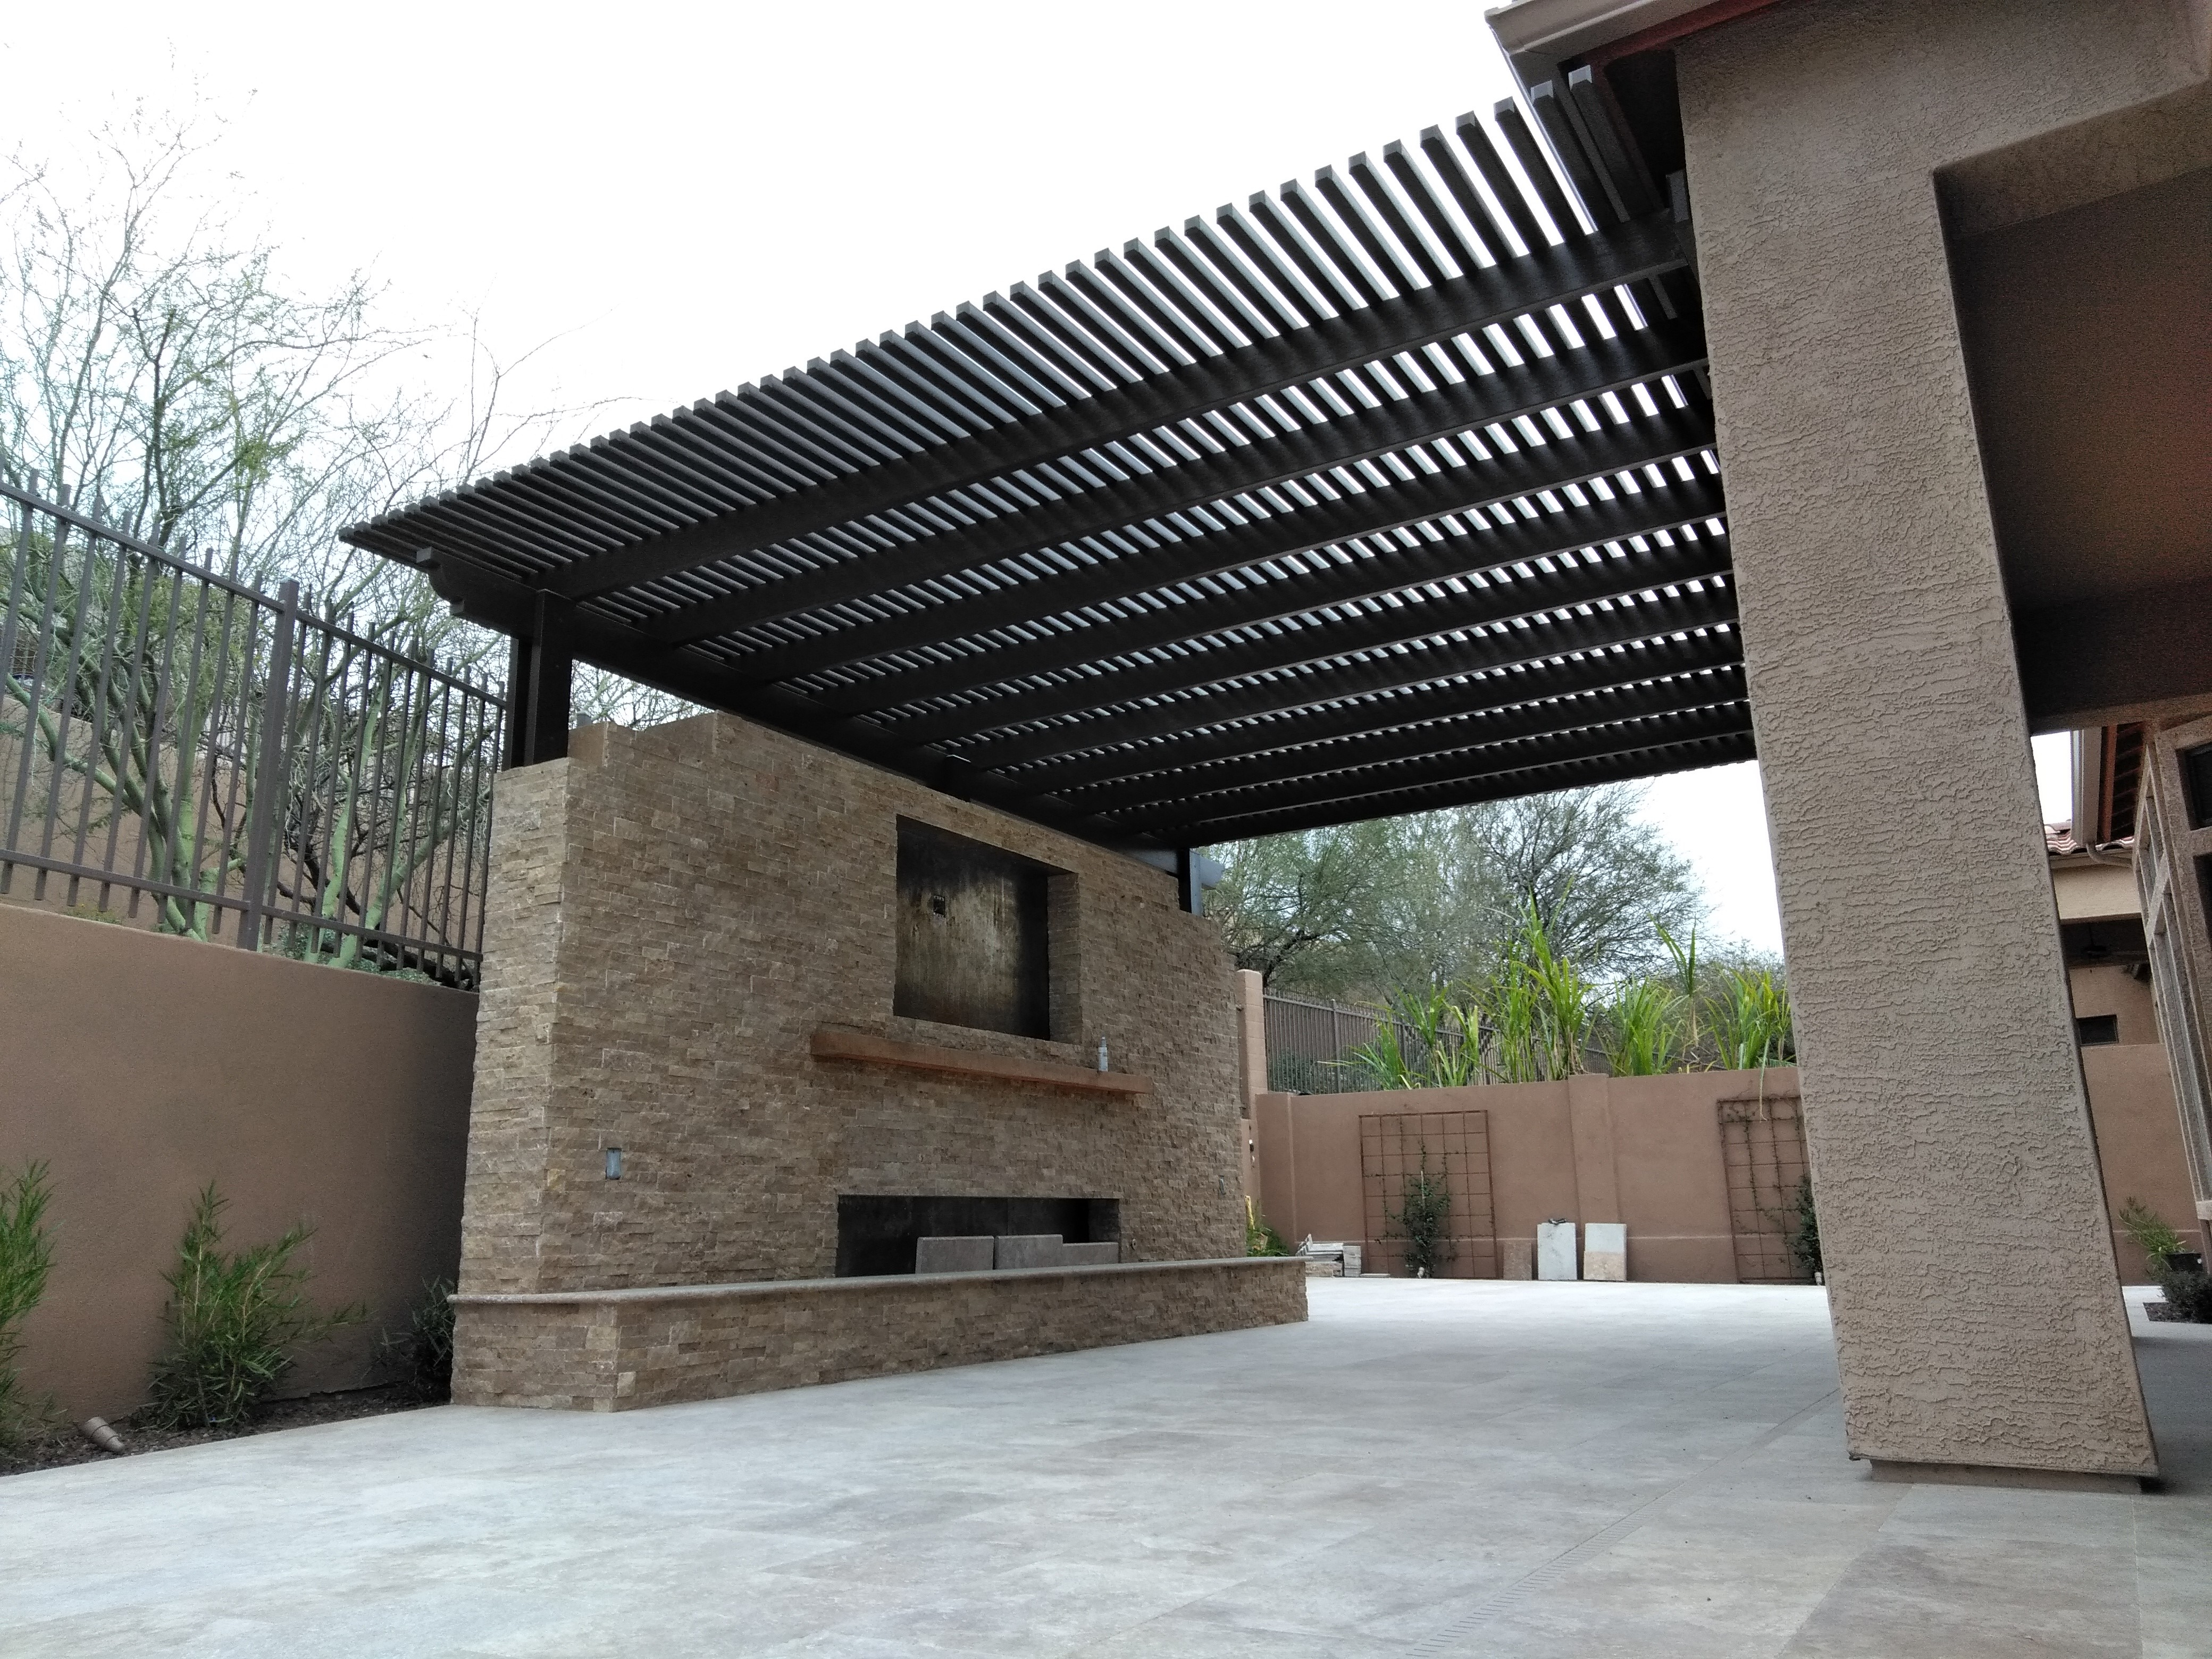 Alumawood Patio Covers Arizona Rain Gutters Shade Experts within measurements 4160 X 3120